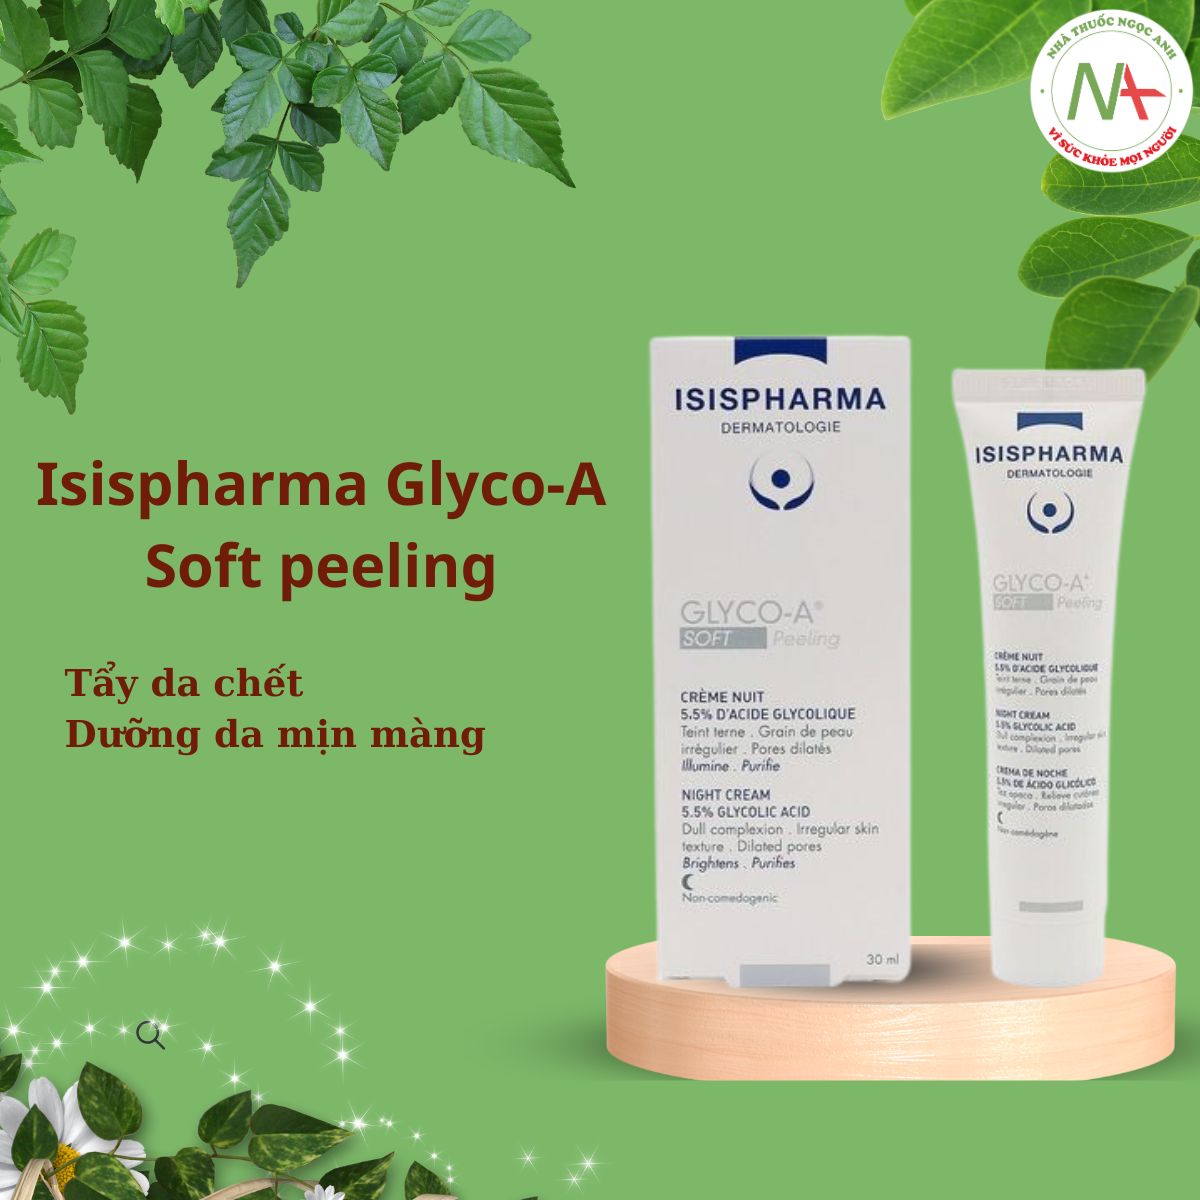 Isispharma Glyco-A Soft peeling